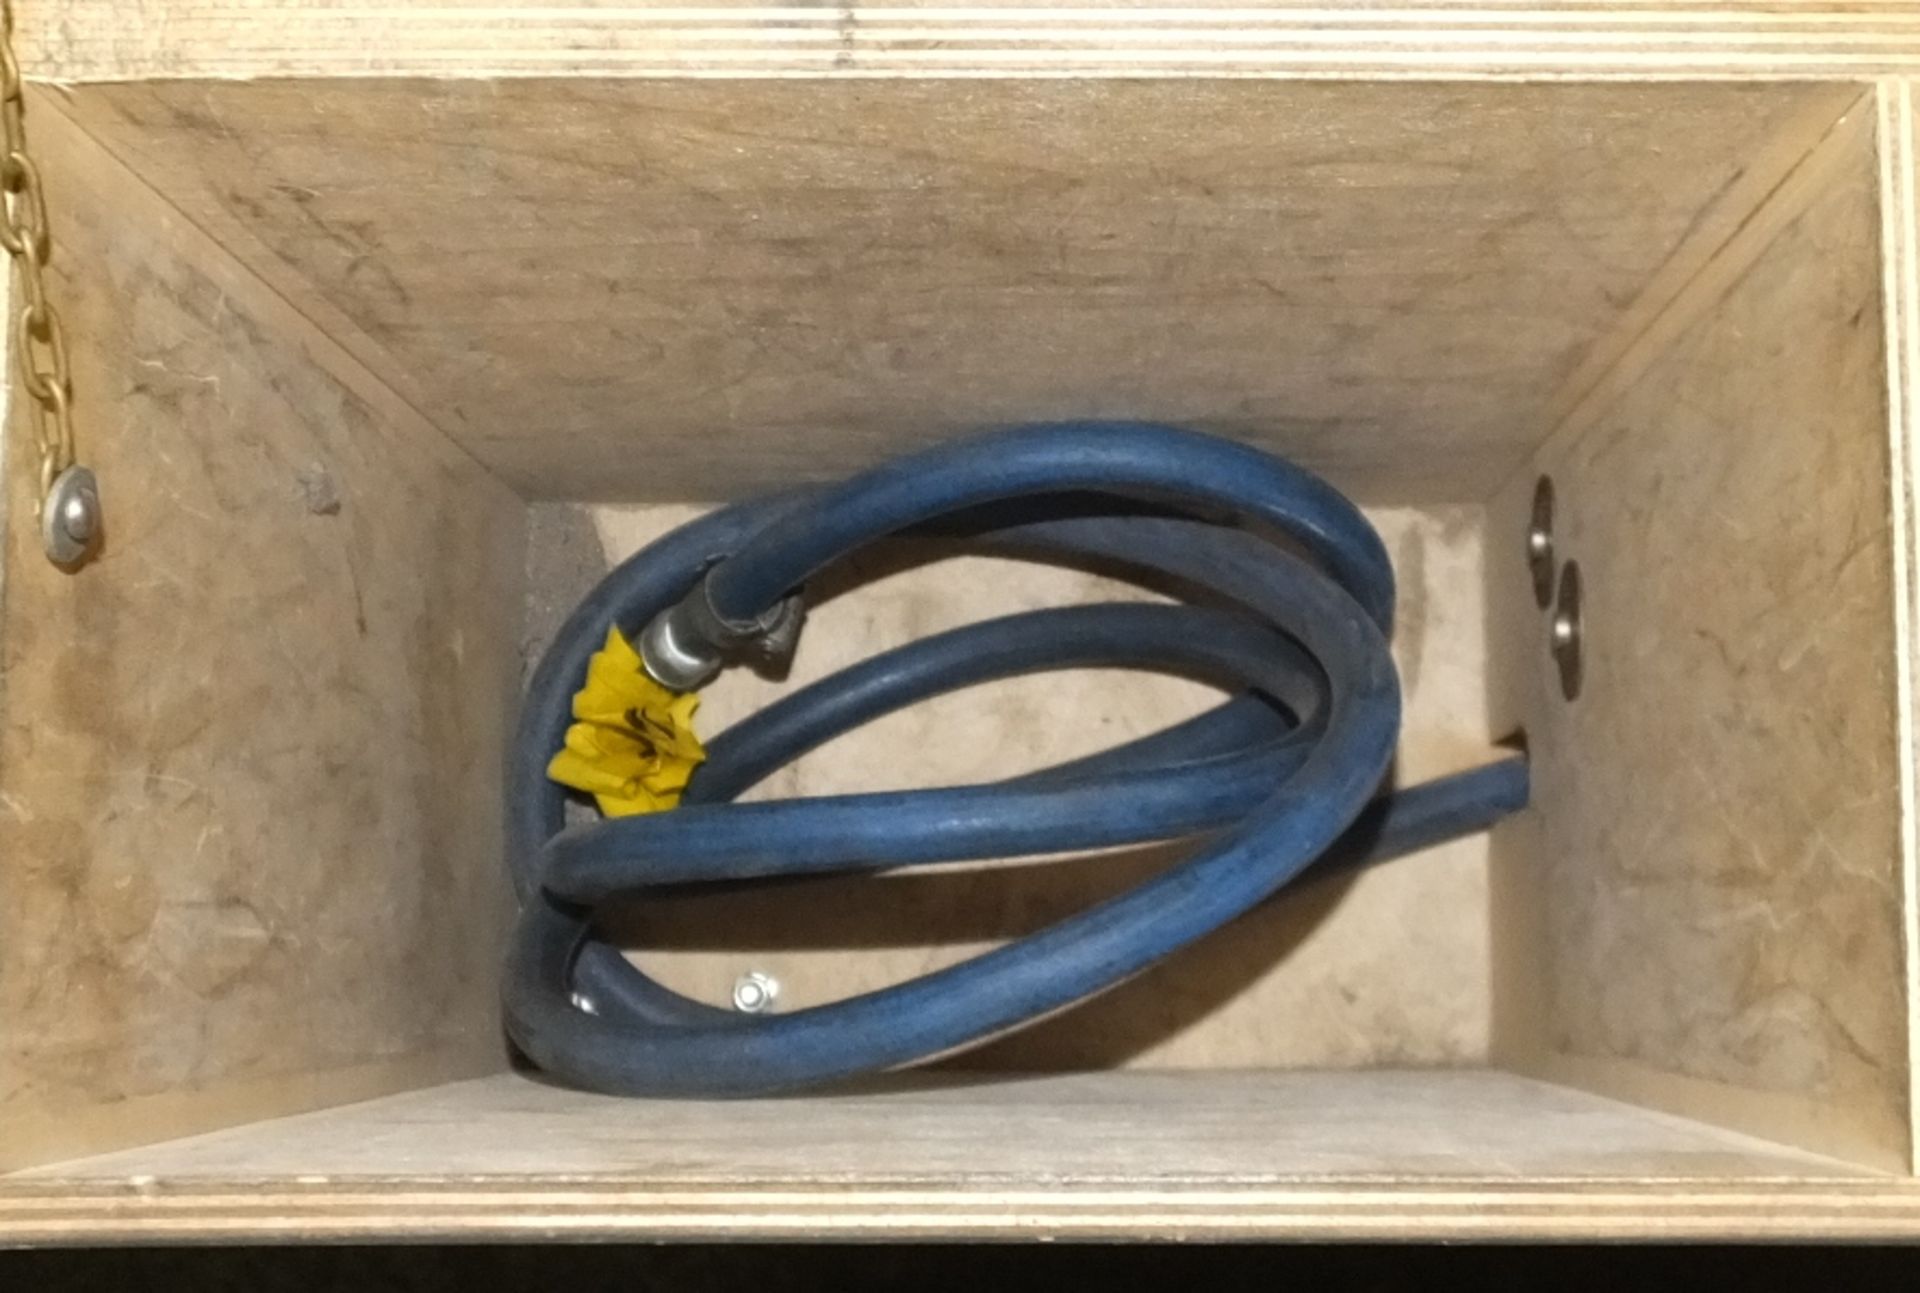 Fuel System pressurisation rig in wooden box - Image 5 of 5